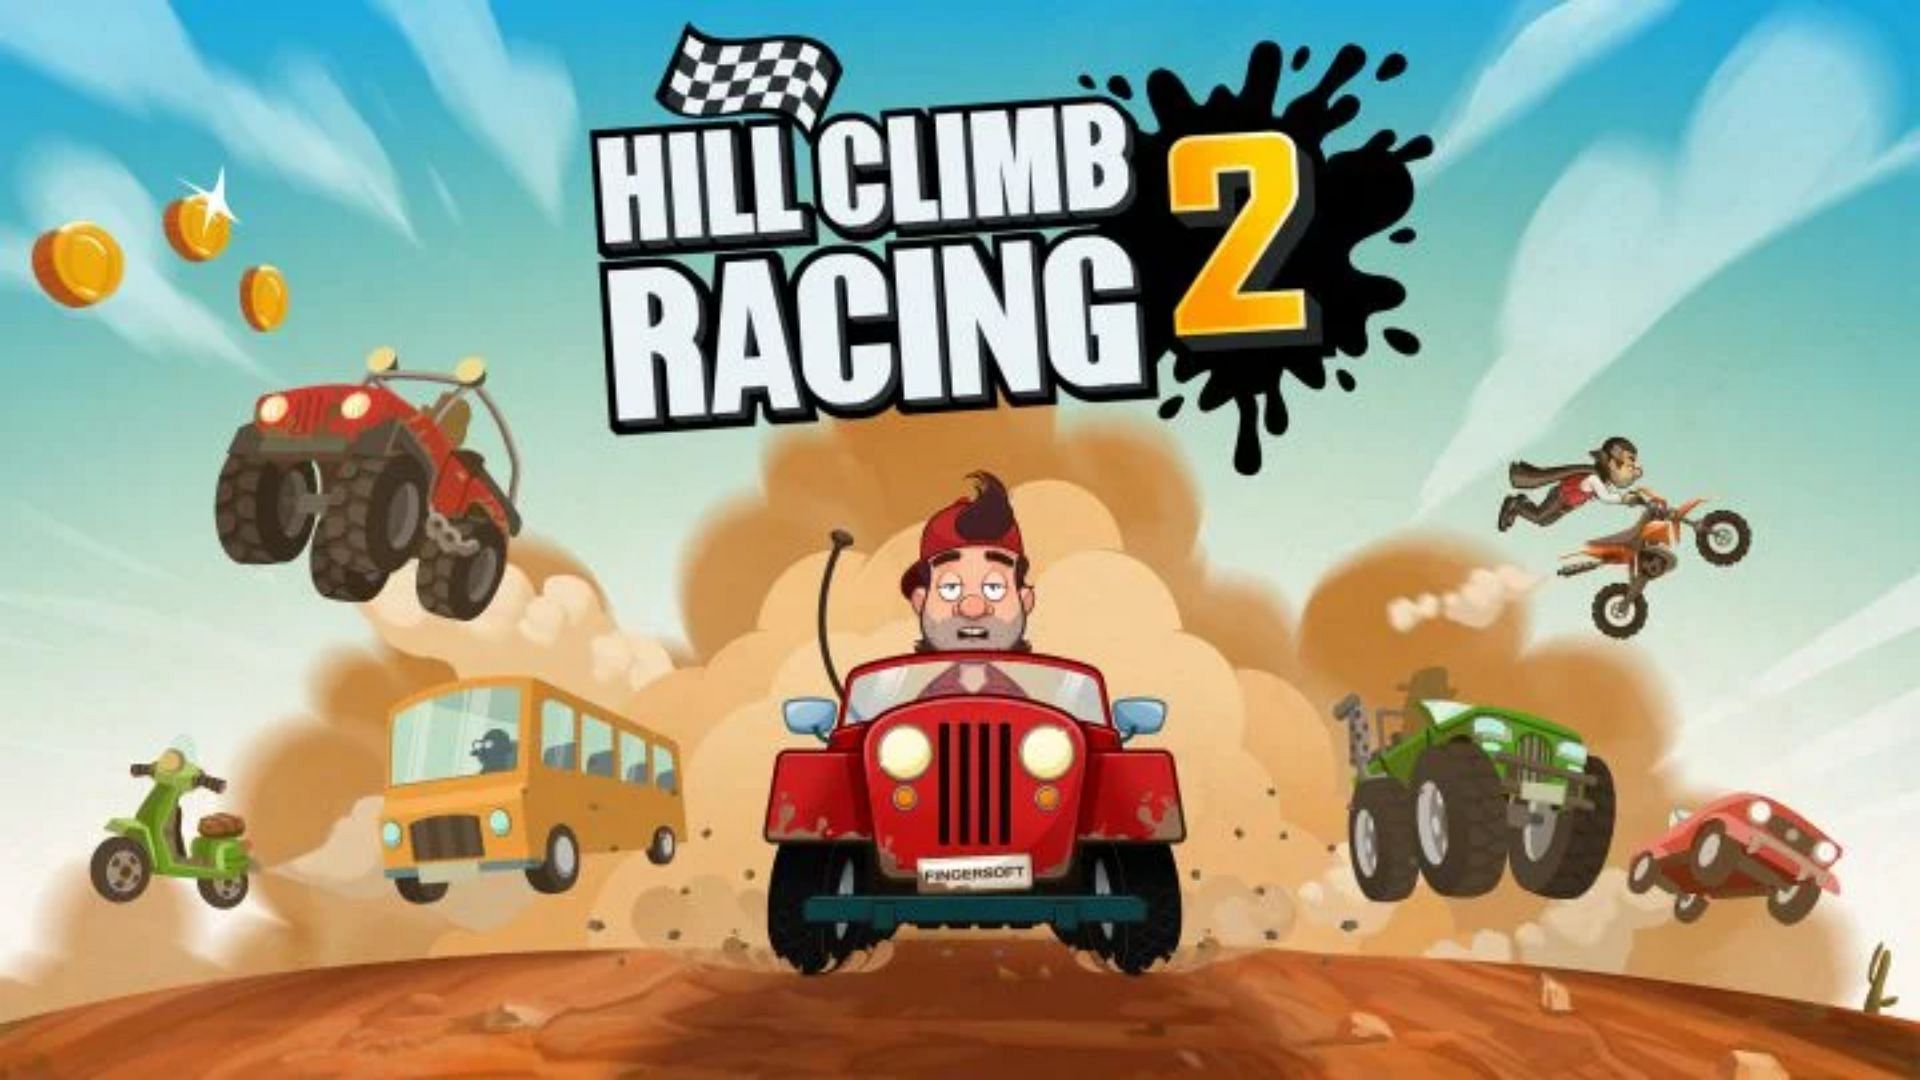 Hill Climb Racing 2 - Roblox